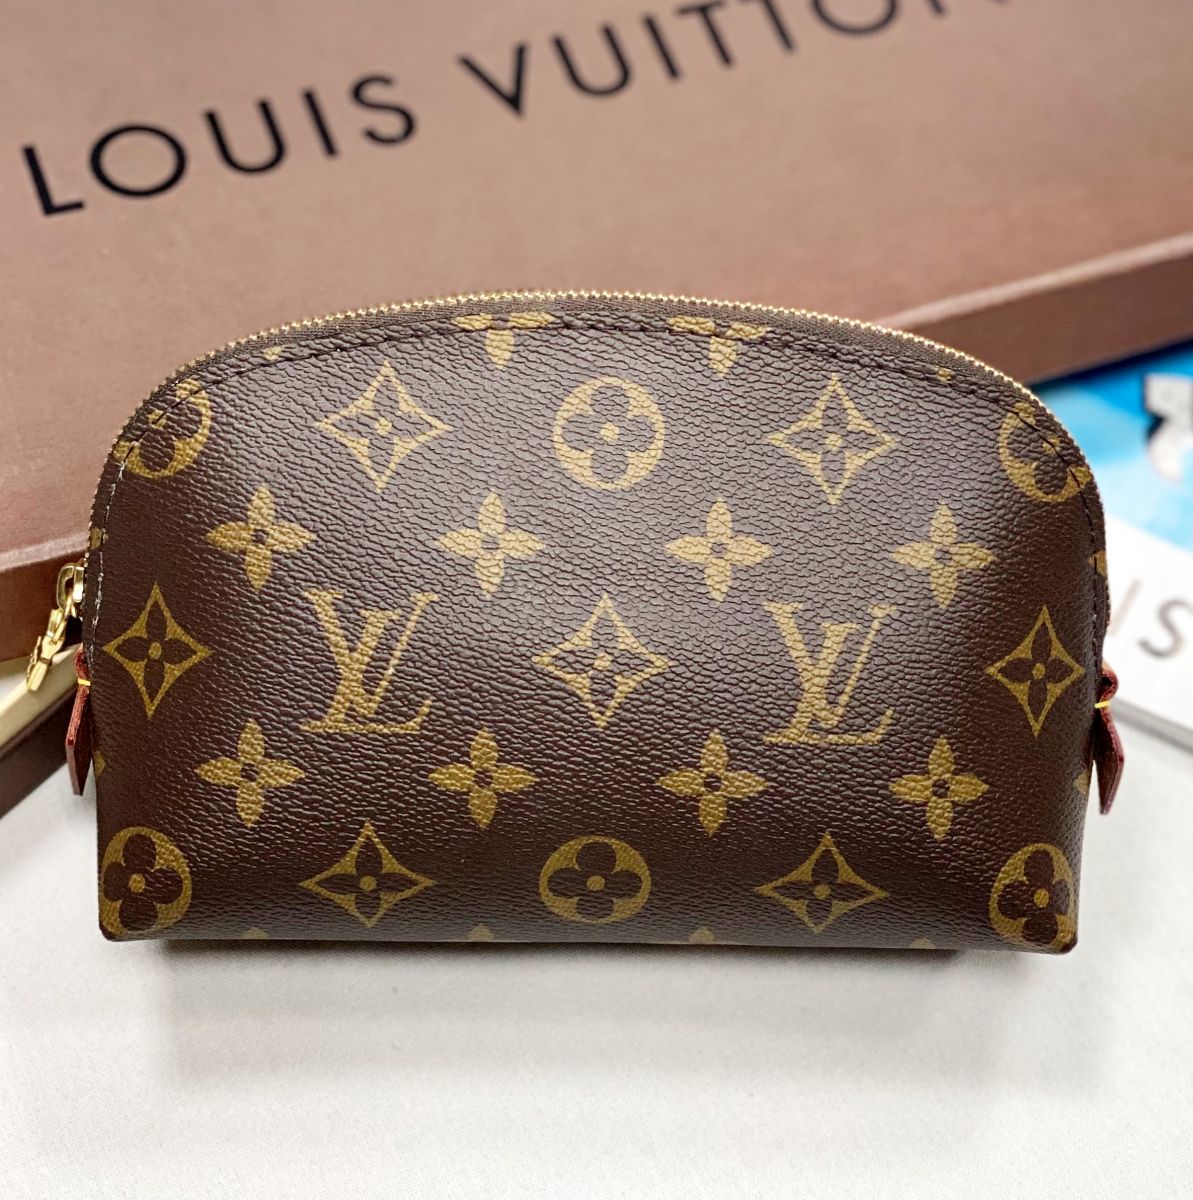 Косметичка Louis Vuitton размер 18/12 цена 18 462 руб 